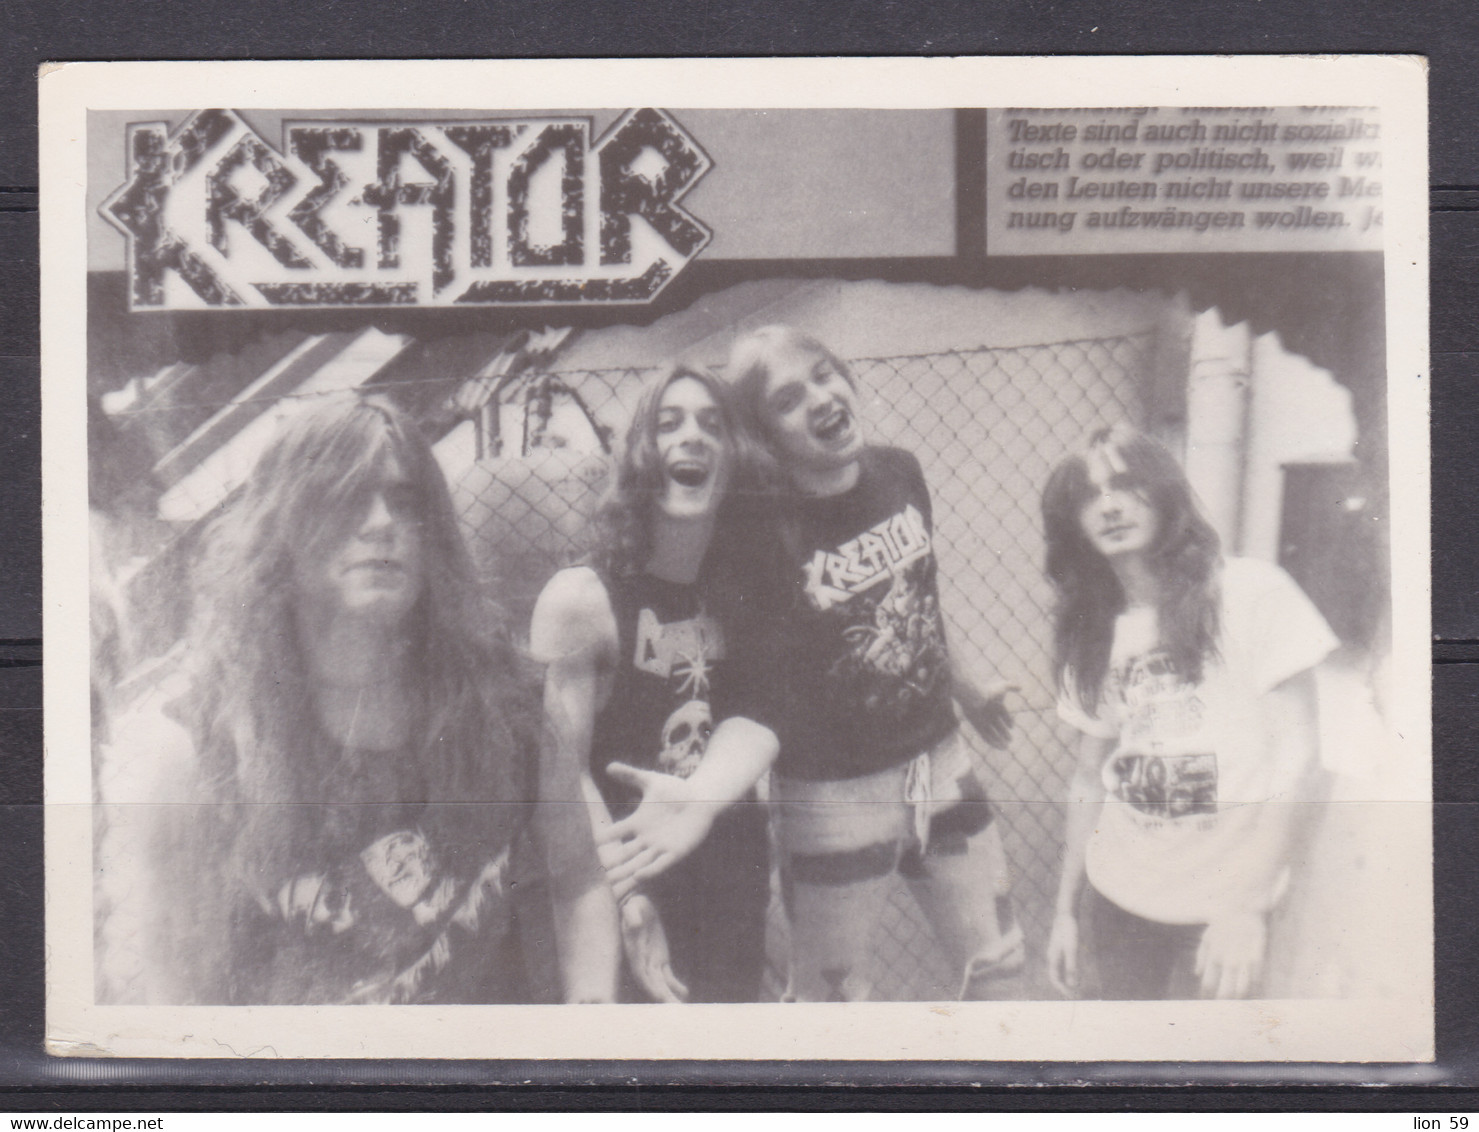 272875 / Kreator -  German Thrash Metal Band From Essen, Formed In 1982 Vocalist  Rhythm Guitarist Miland "Mille" Photo - Photos